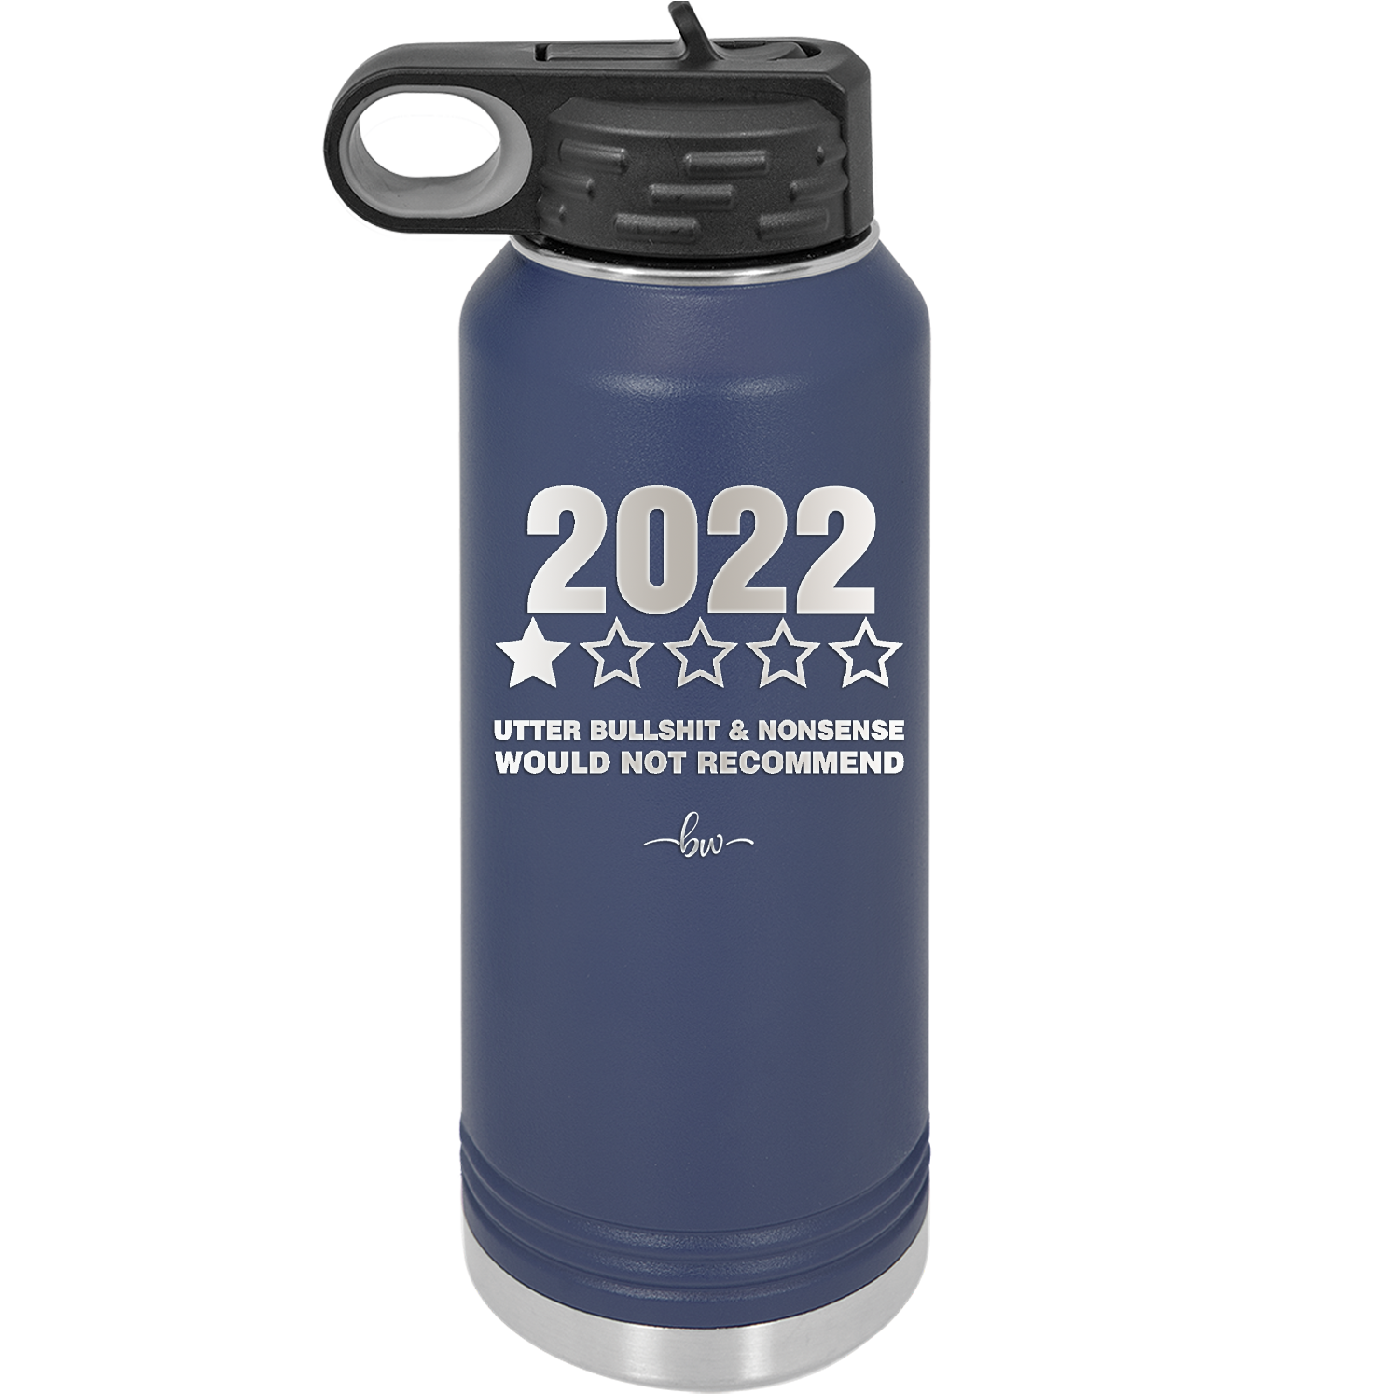 32 oz water bottle  2022 utter bullshitt and nonsense would not recommend- navy